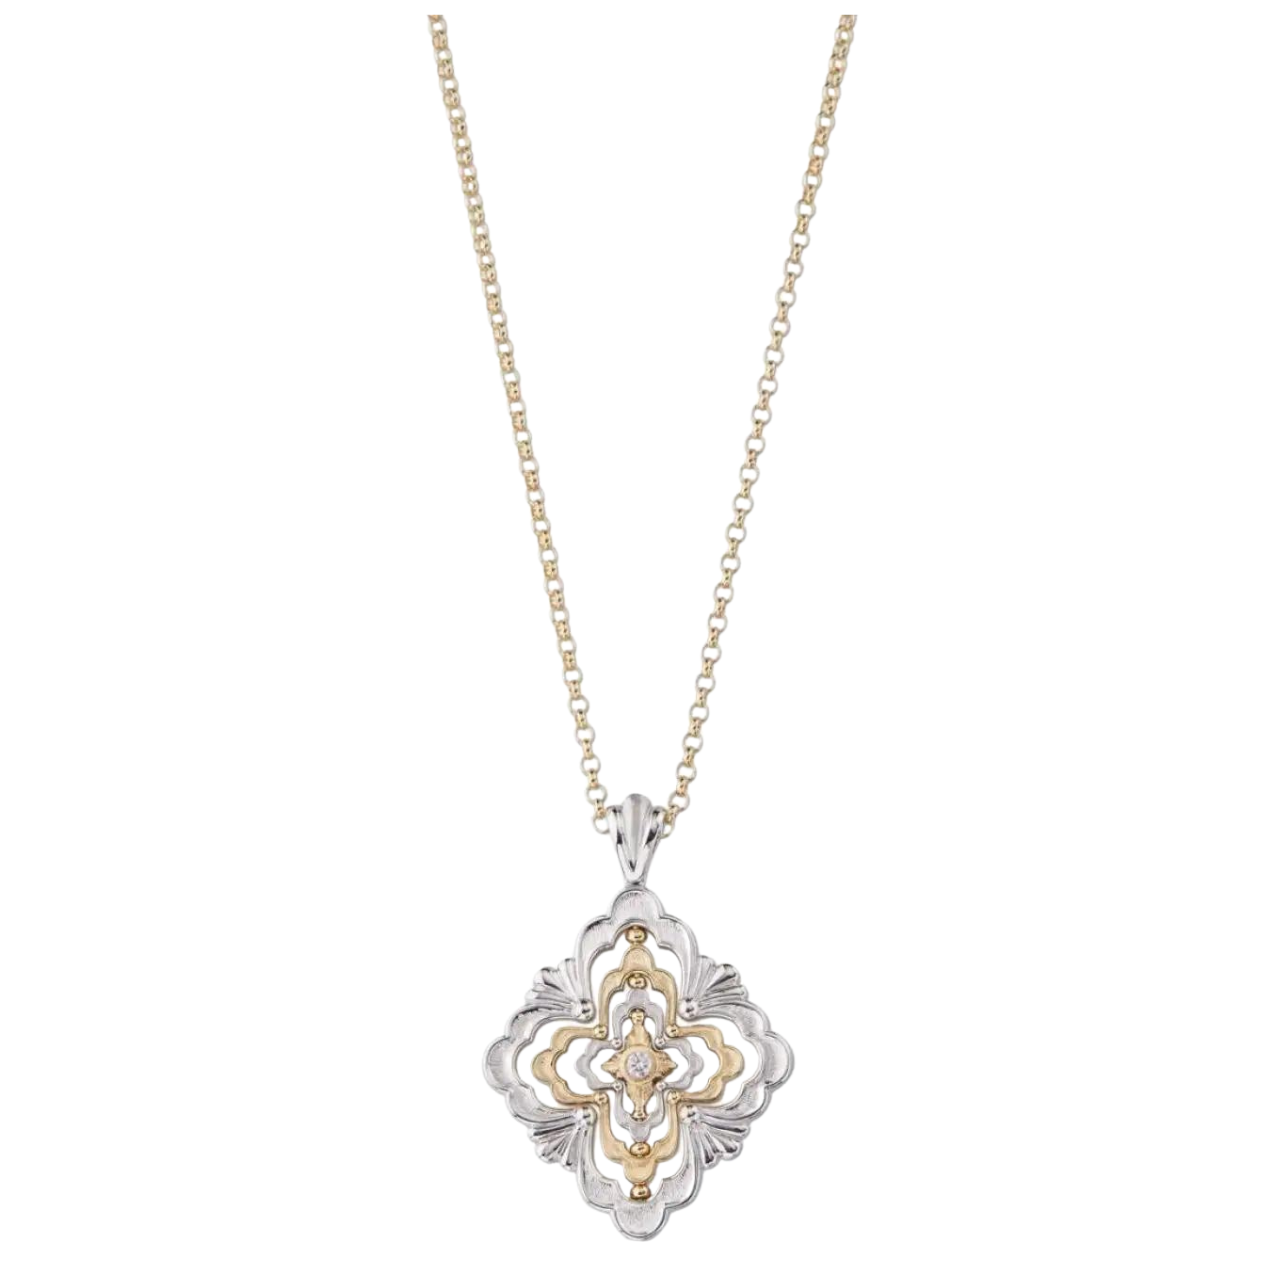 Buccellati Opera Galileo Pendant Necklace in white and yellow gold with diamonds